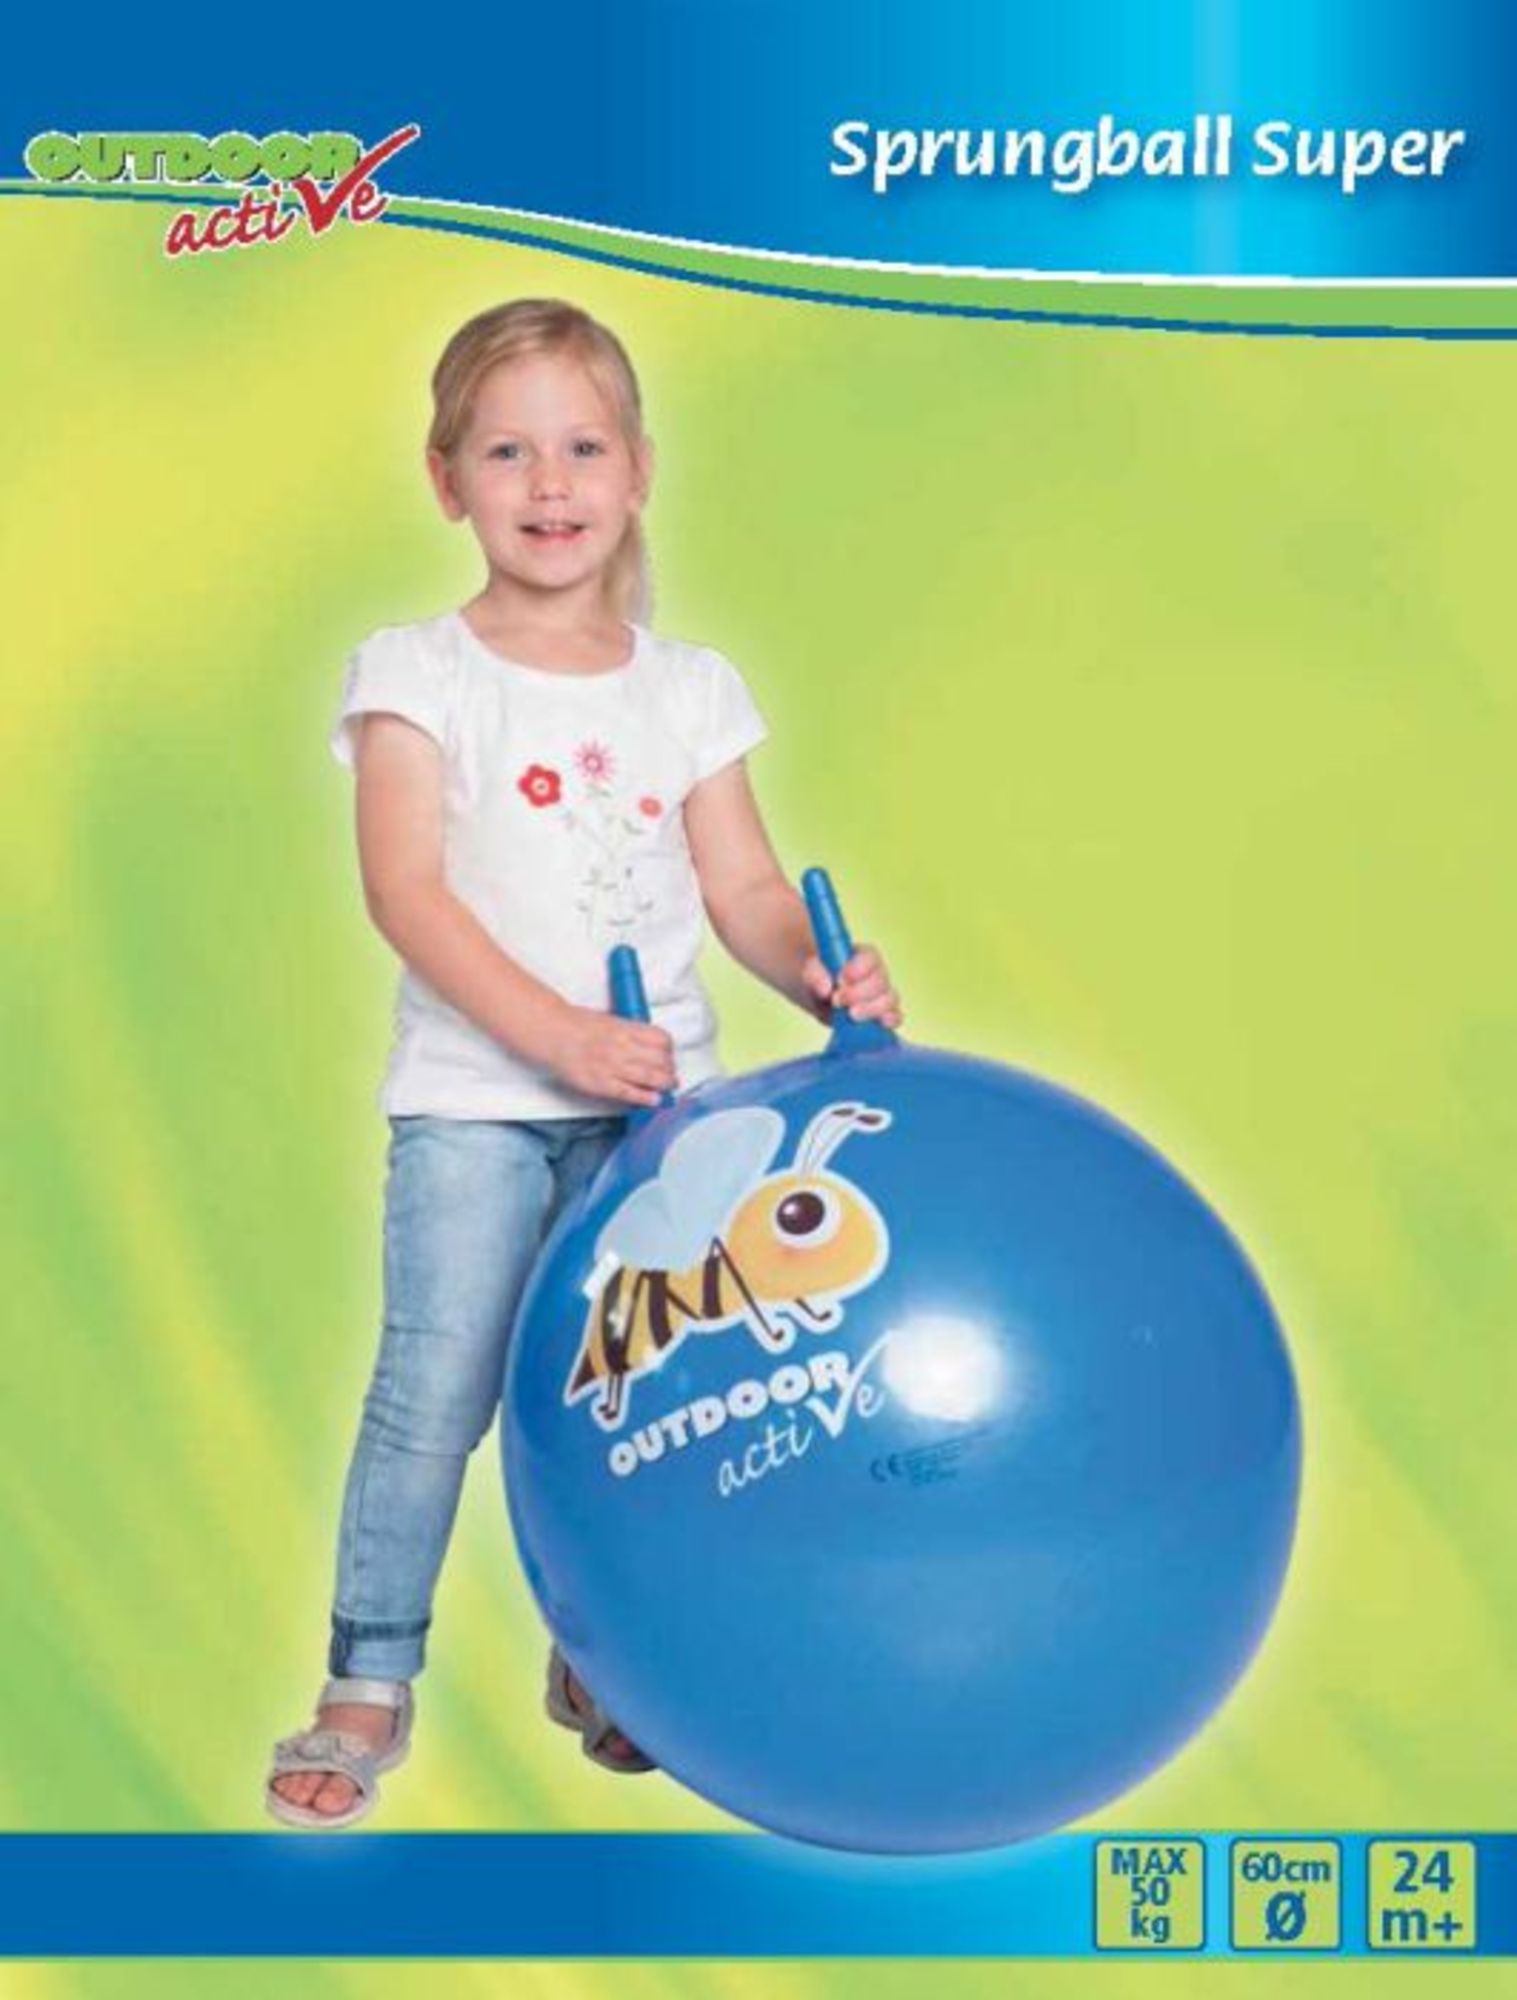 Outdoor active Sprungball Super, # 60 cm' kaufen - Spielwaren